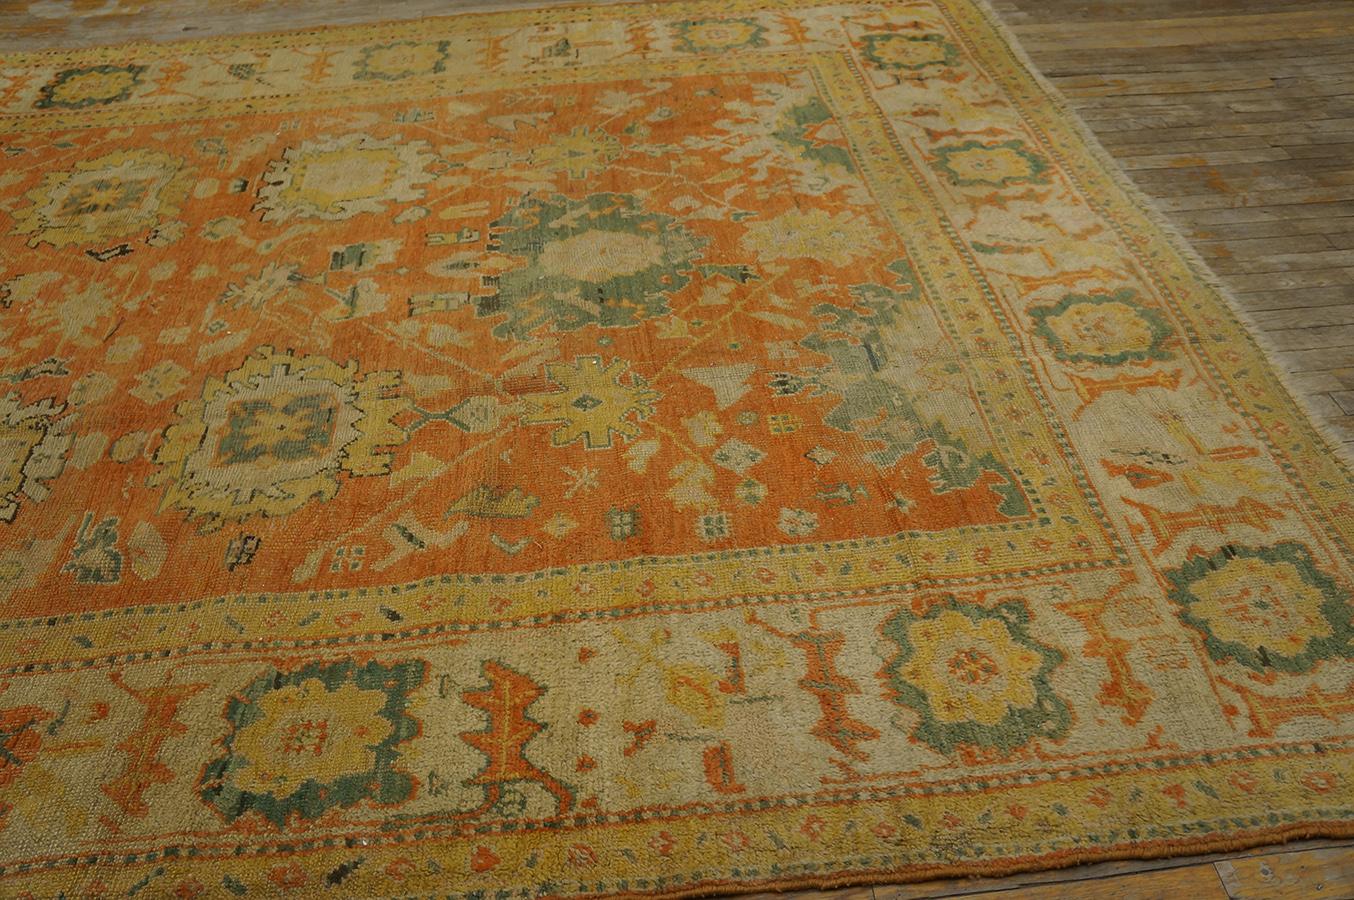 Late 19th Century Turkish Anatolian Oushak Carpet (8'4''x 11'2'' - 254 x 340 cm) For Sale 7